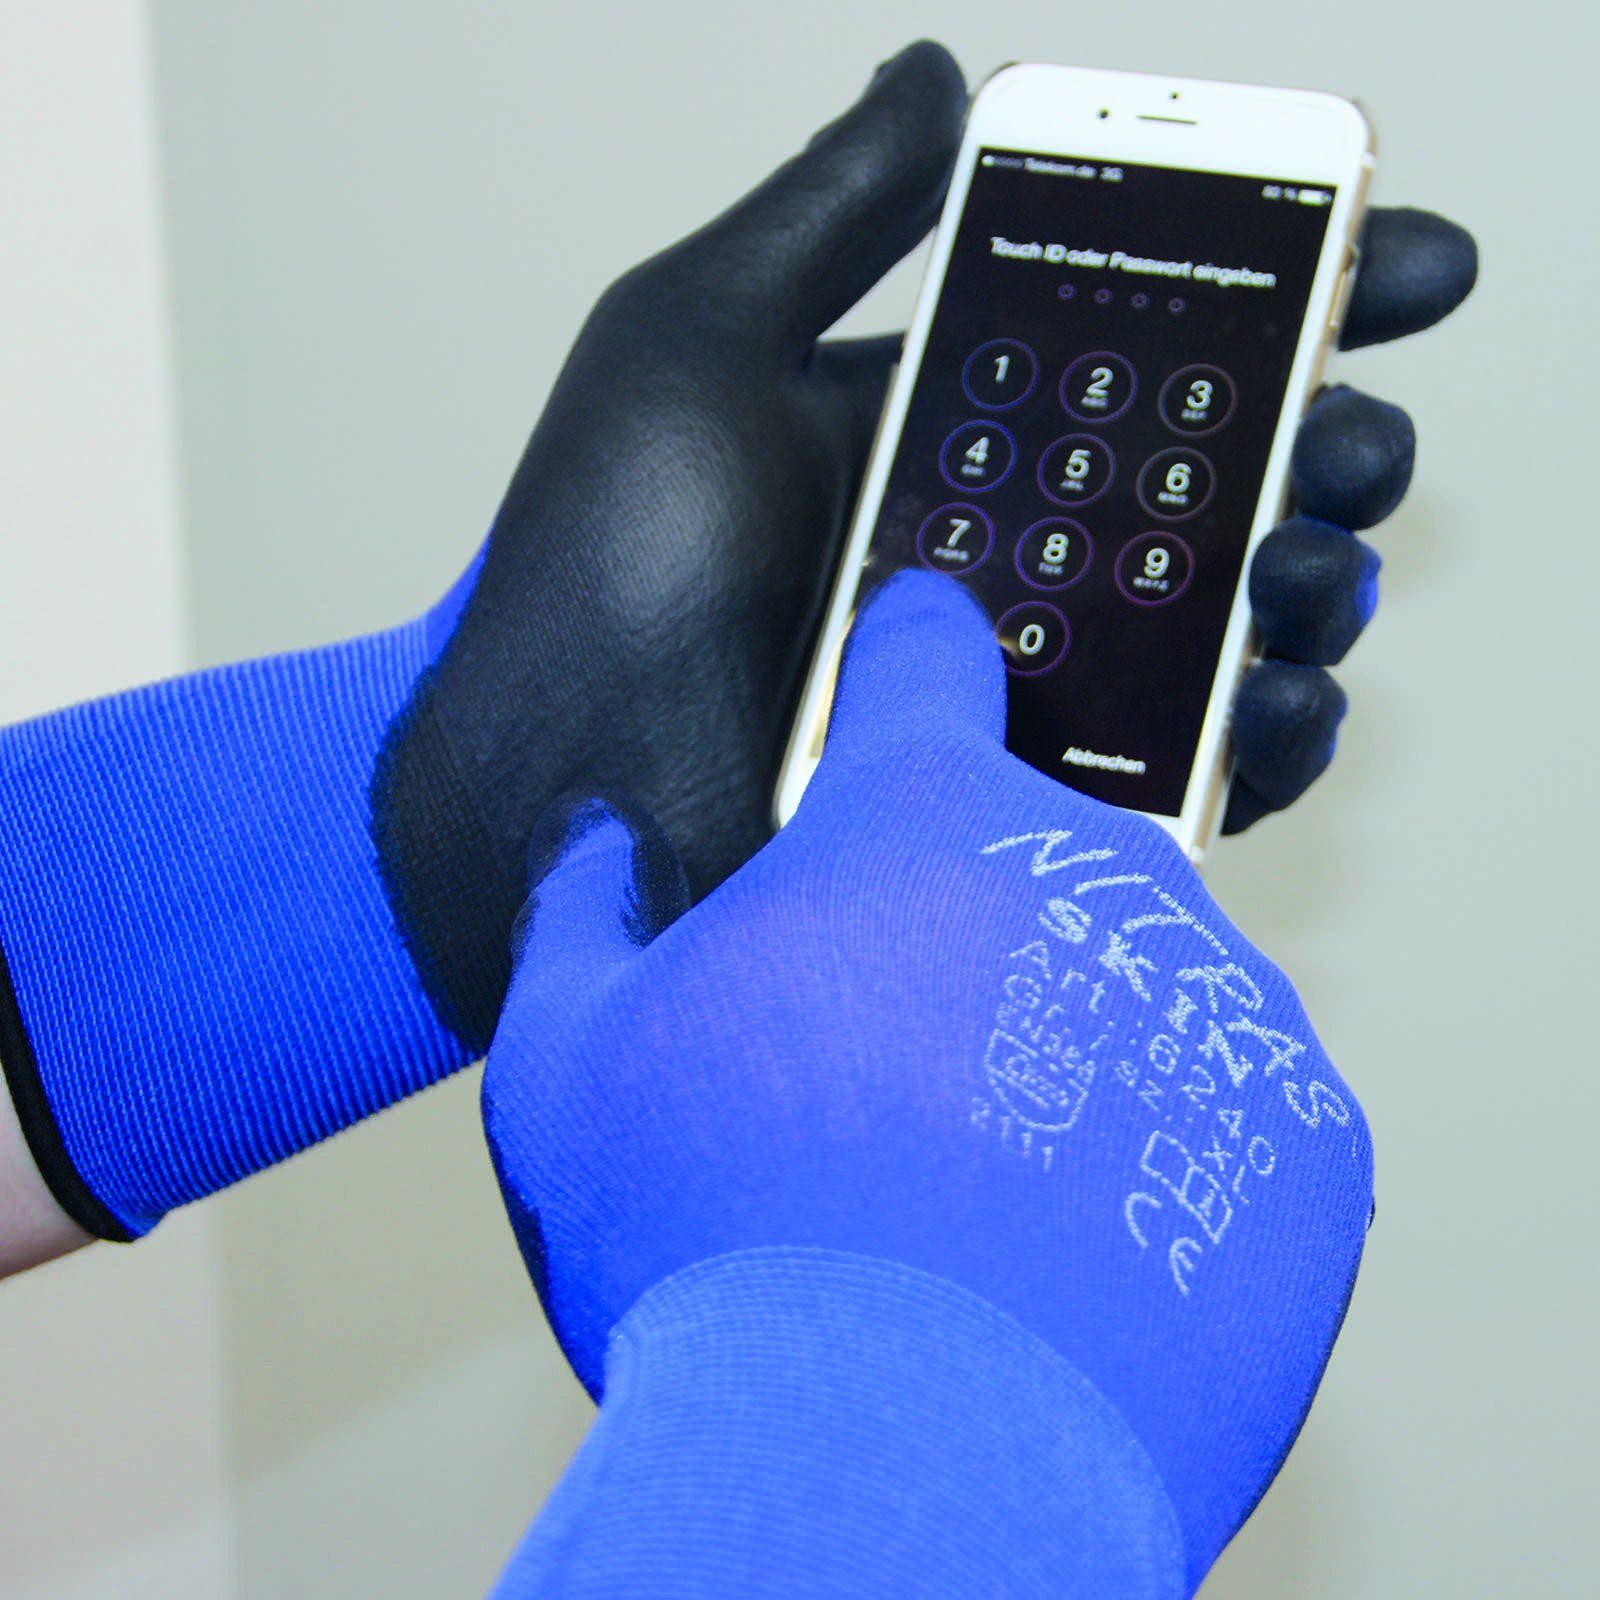 Nitras Nitril-Handschuhe NITRAS 6240 Skin (Spar-Set) PU-Beschichtung 12 Nylon-Strickhandschuhe, Paar schwarz/blau 